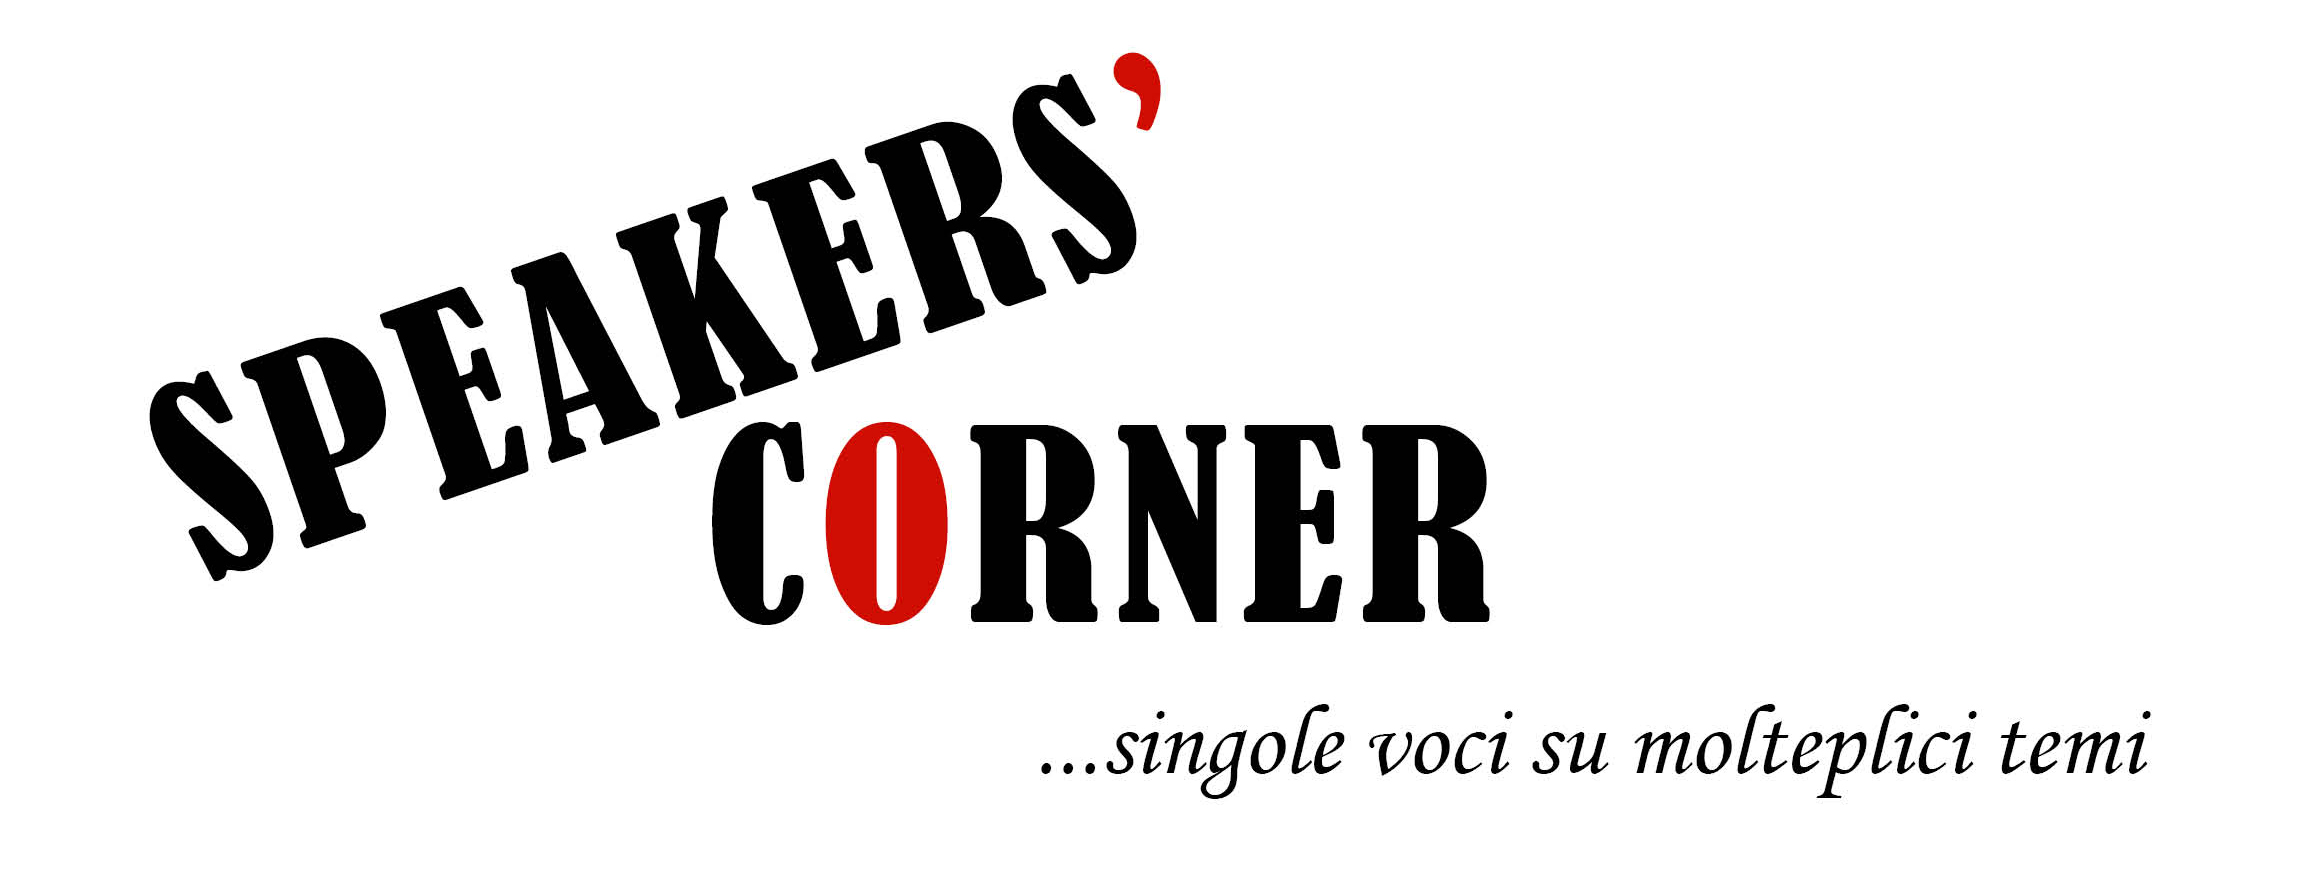 SPEAKERS CORNER LOGO 3